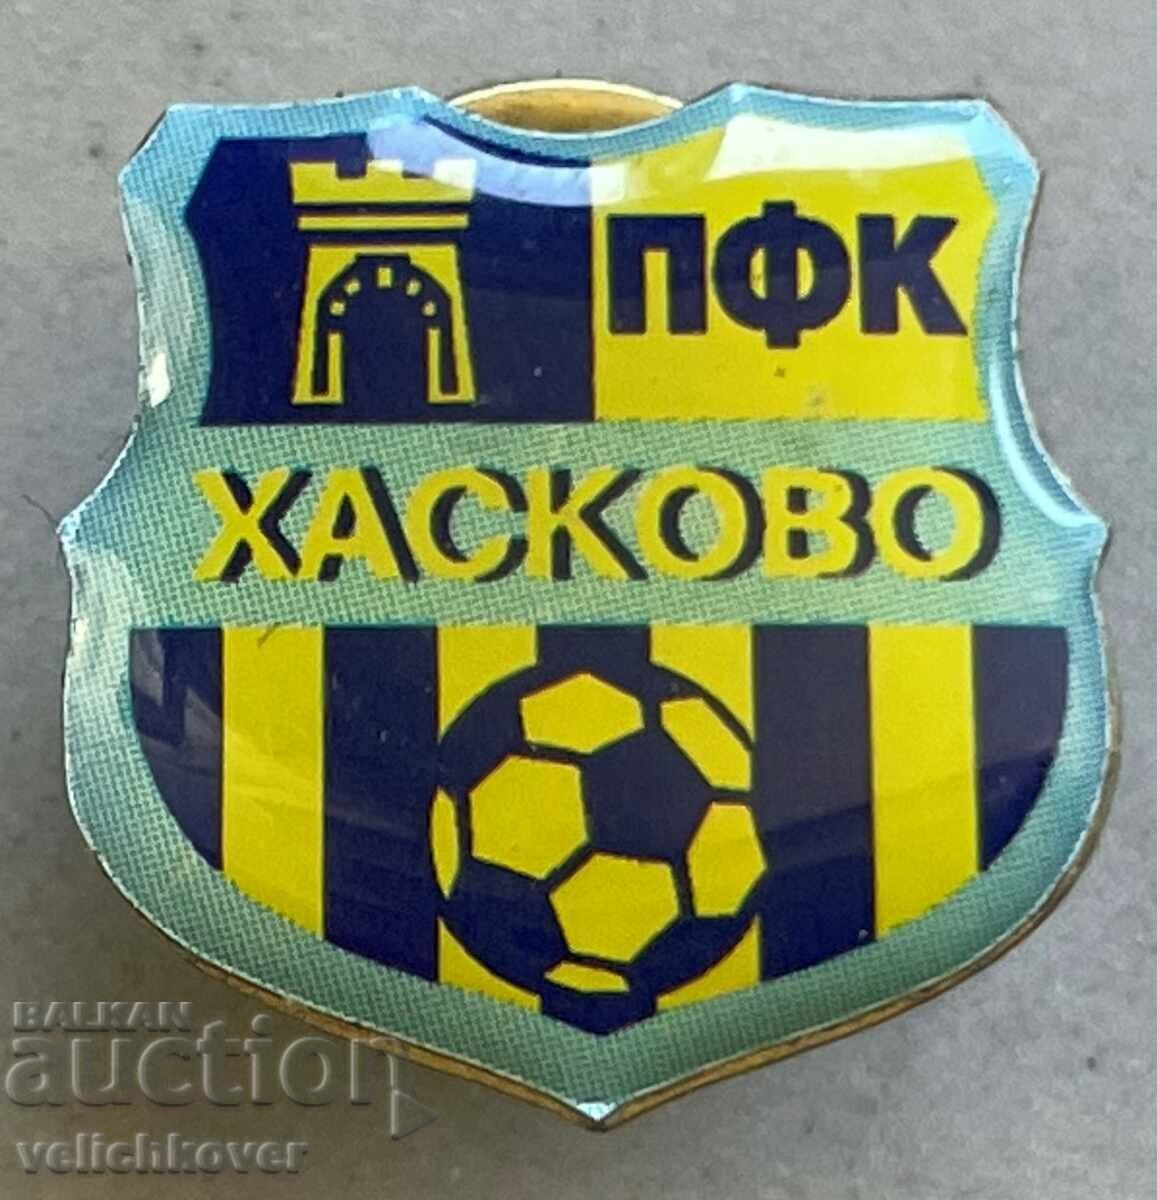 35001 Bulgaria sign football club Haskovo